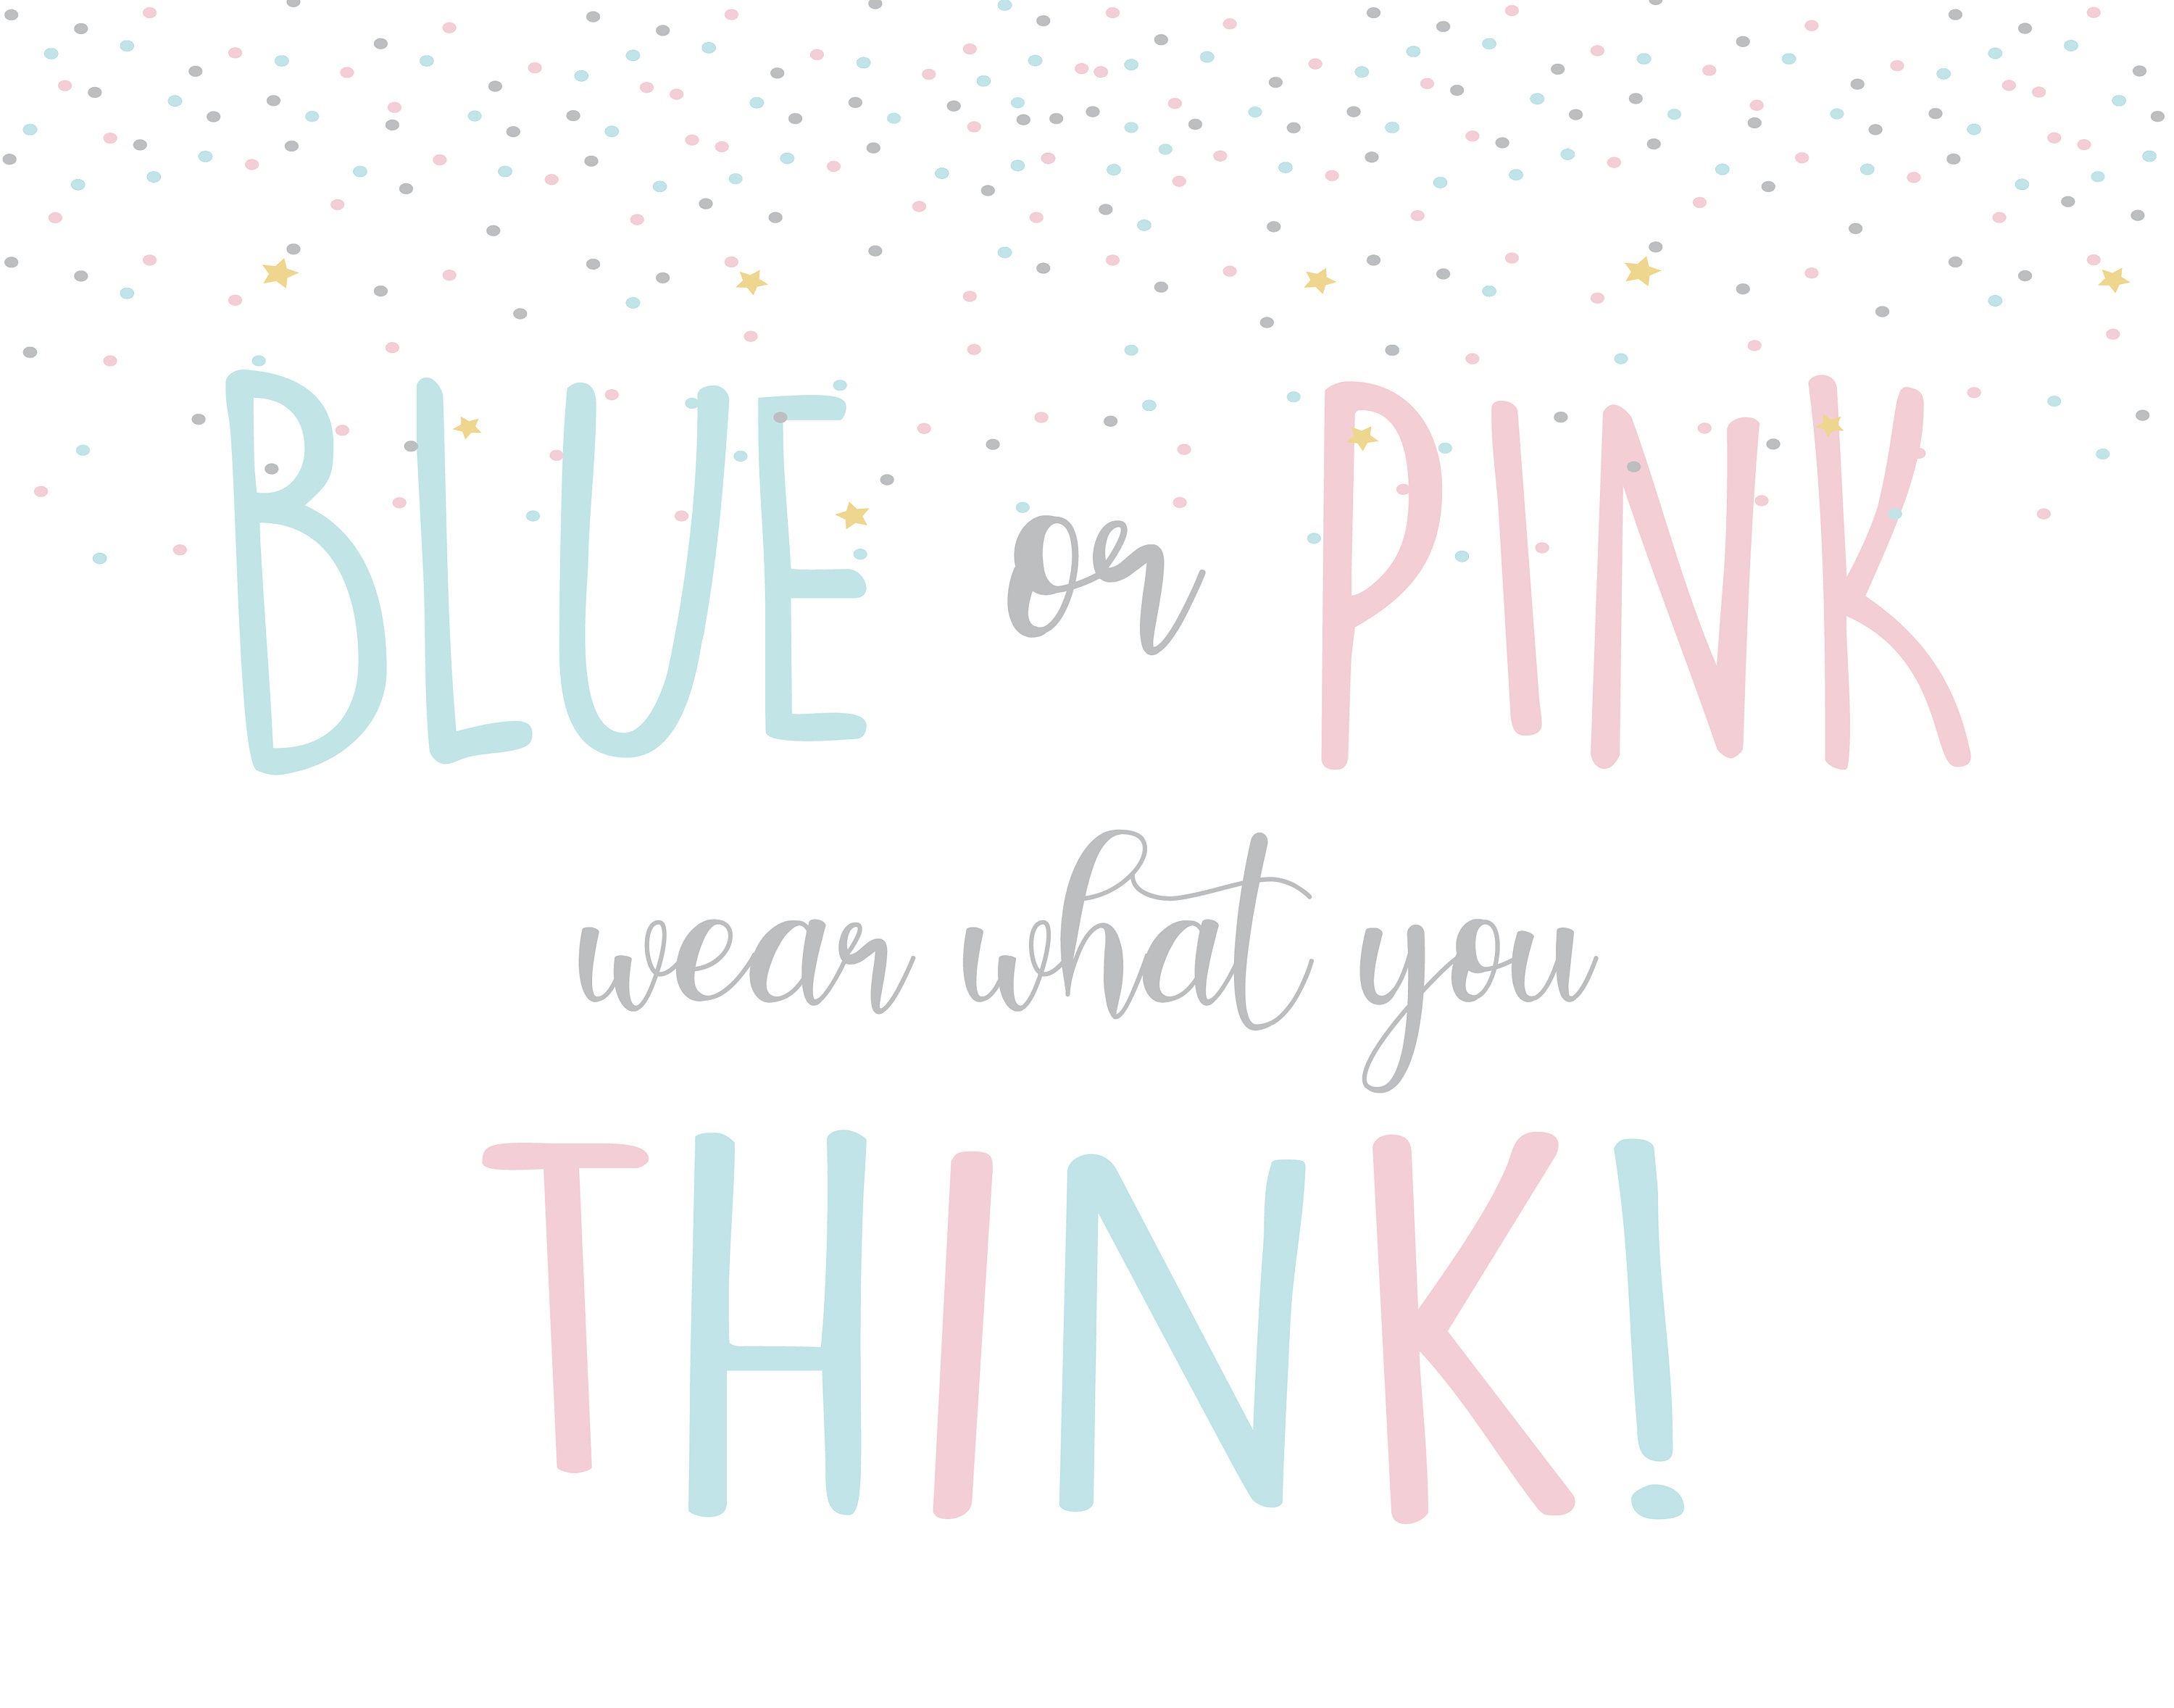 Think Pink Wear Blue